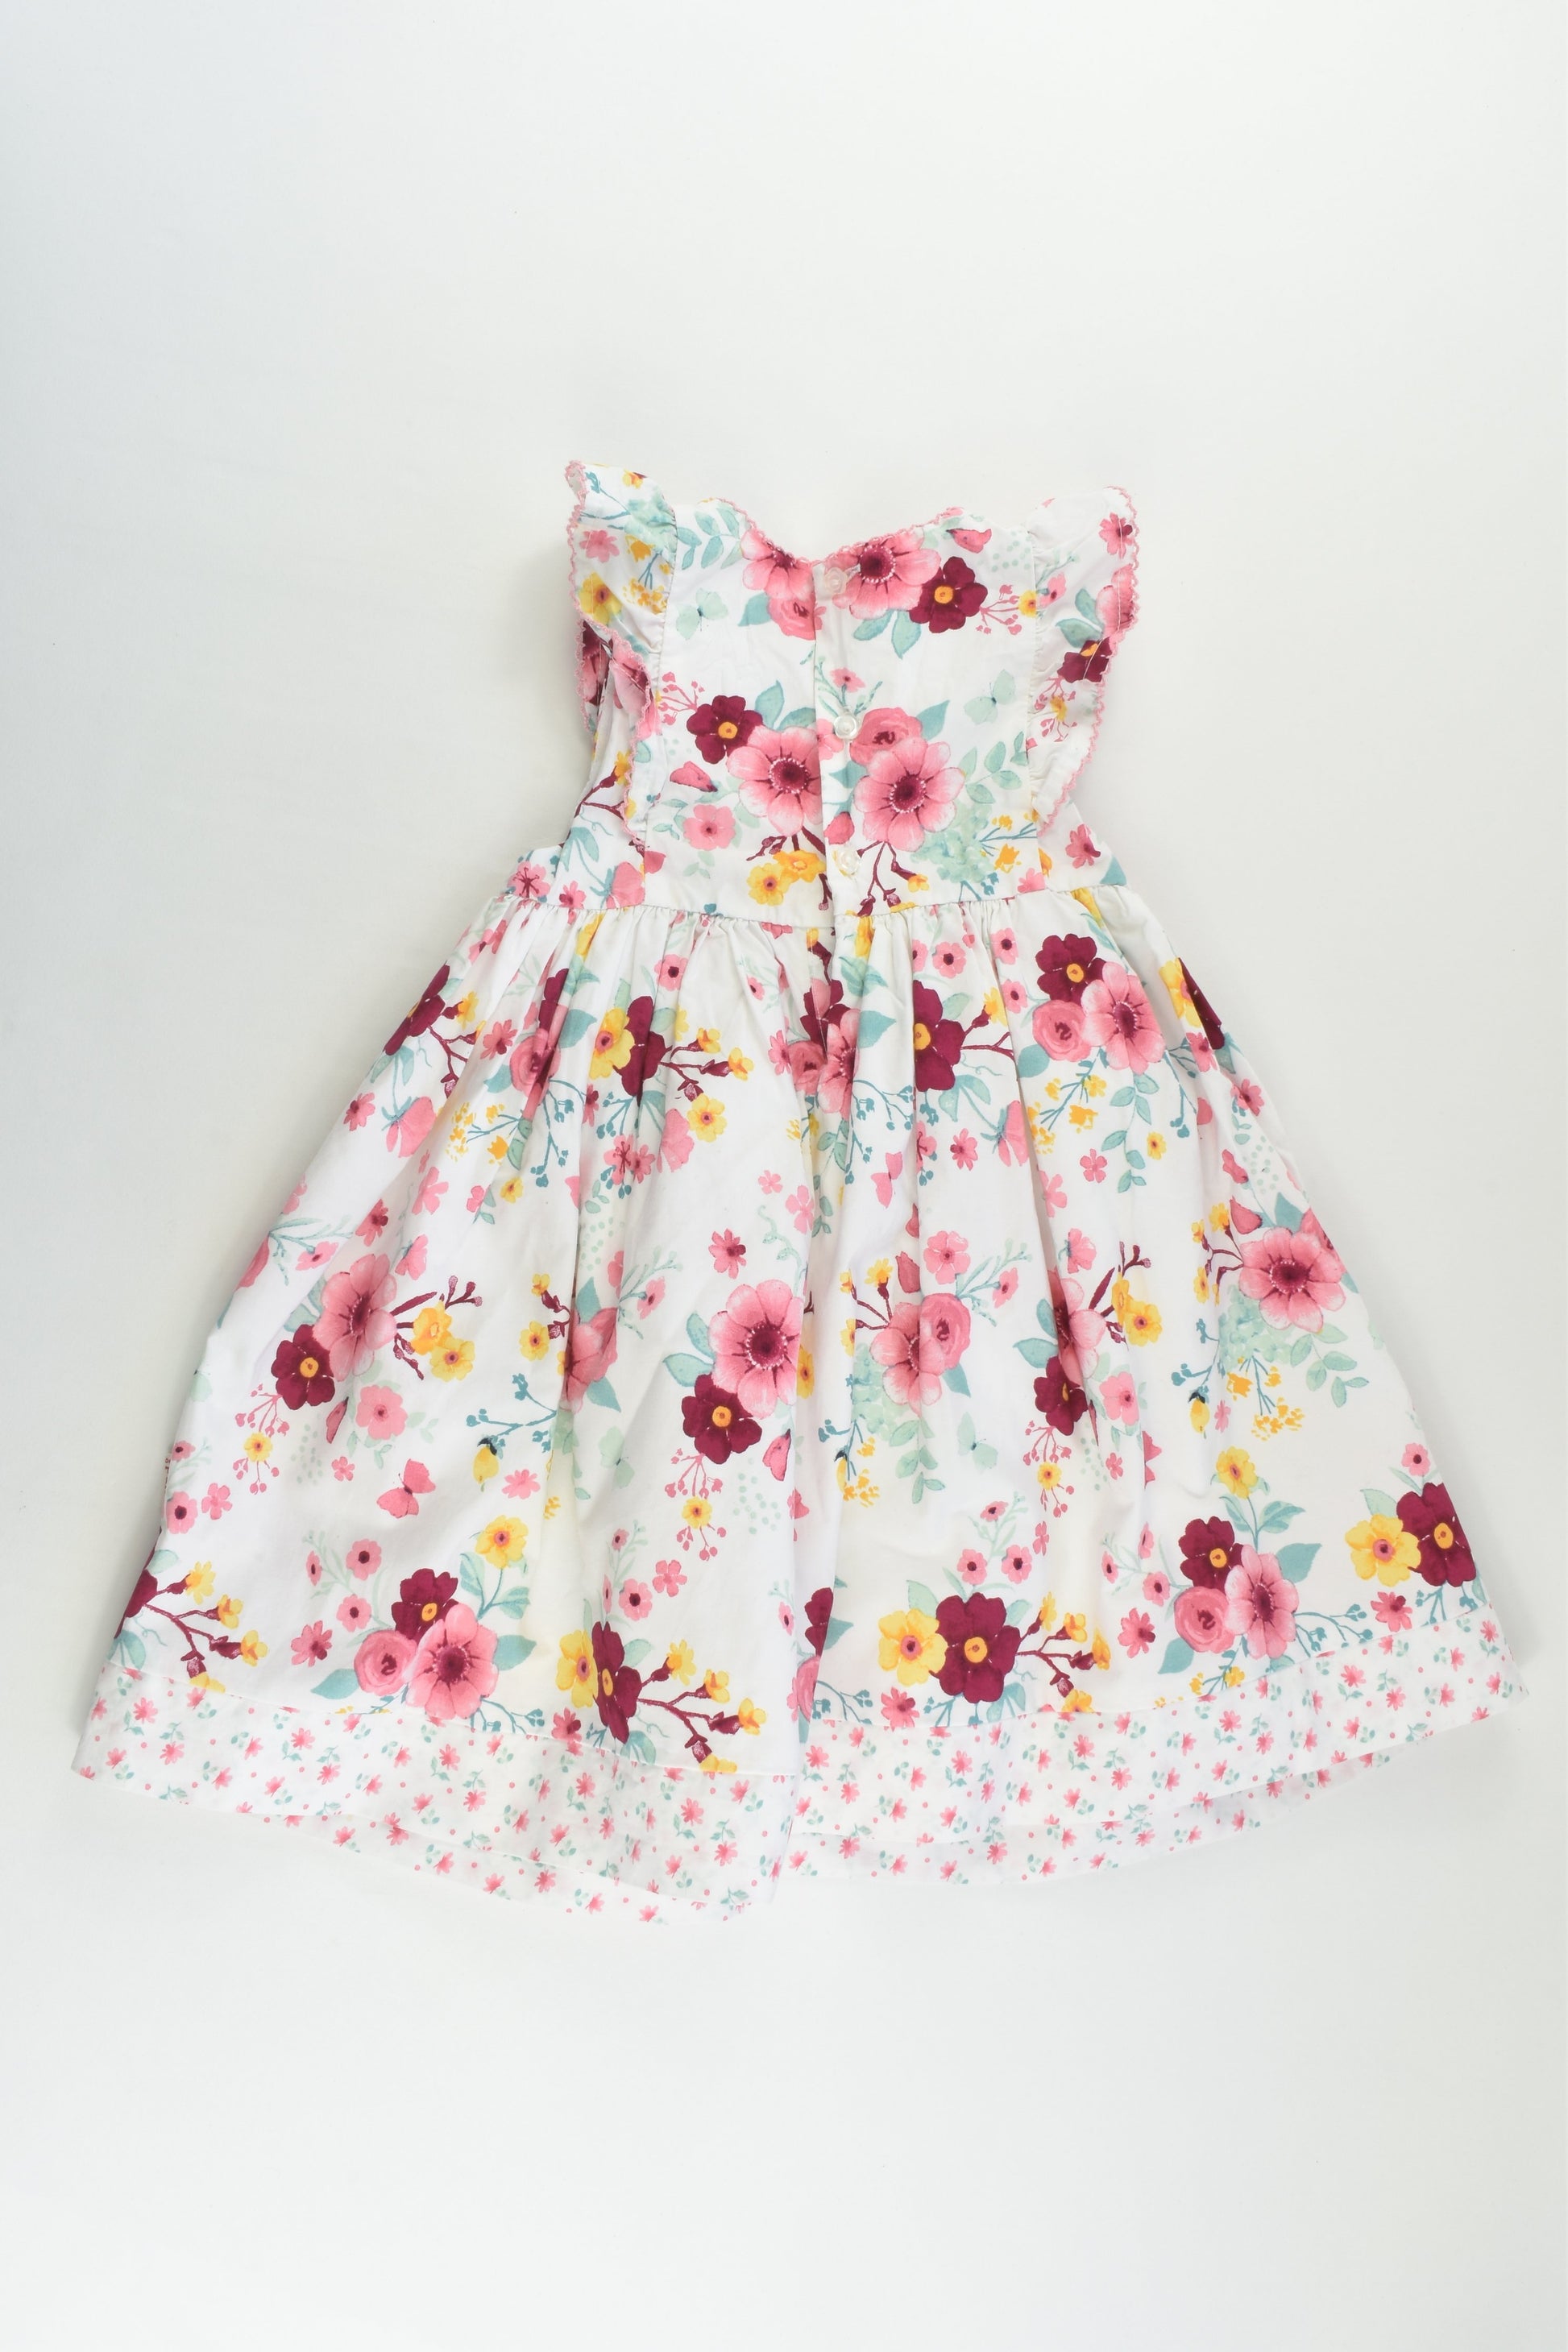 Pumpkin Patch Size 1 (12-18 months) Lined Floral Dress